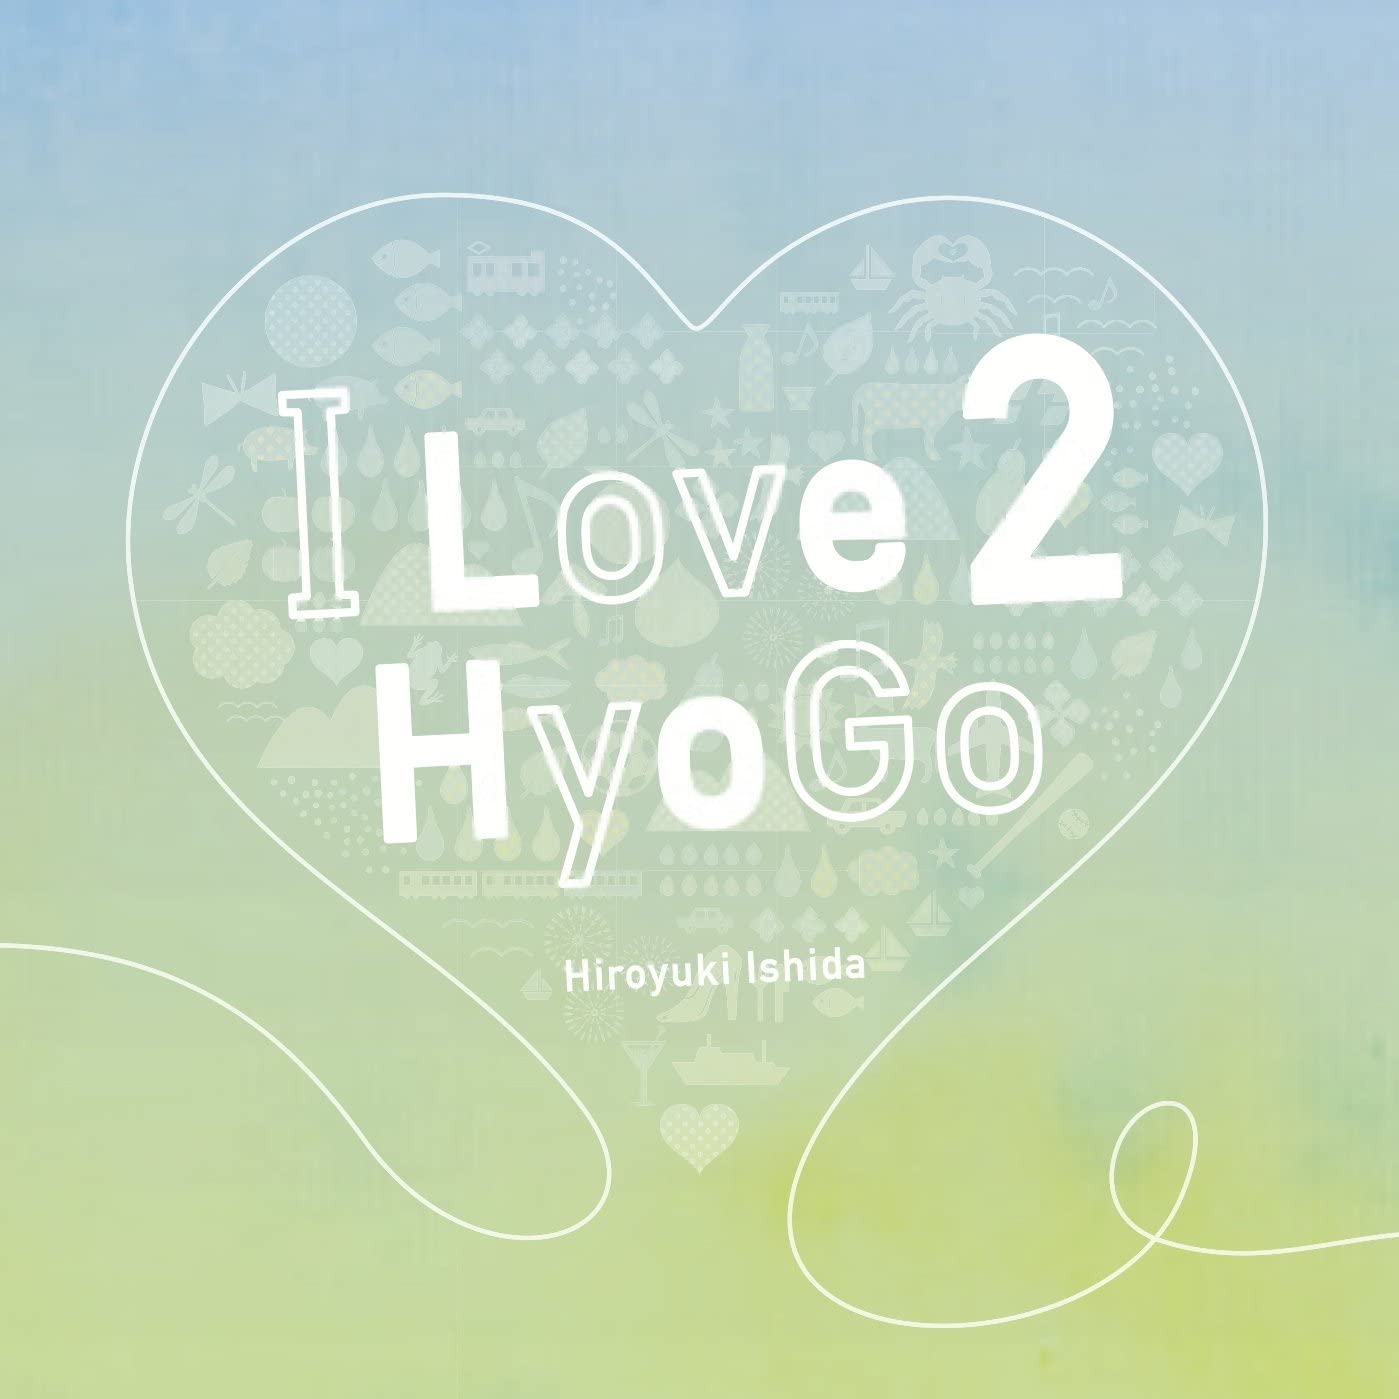 I LOVE HYOGO2